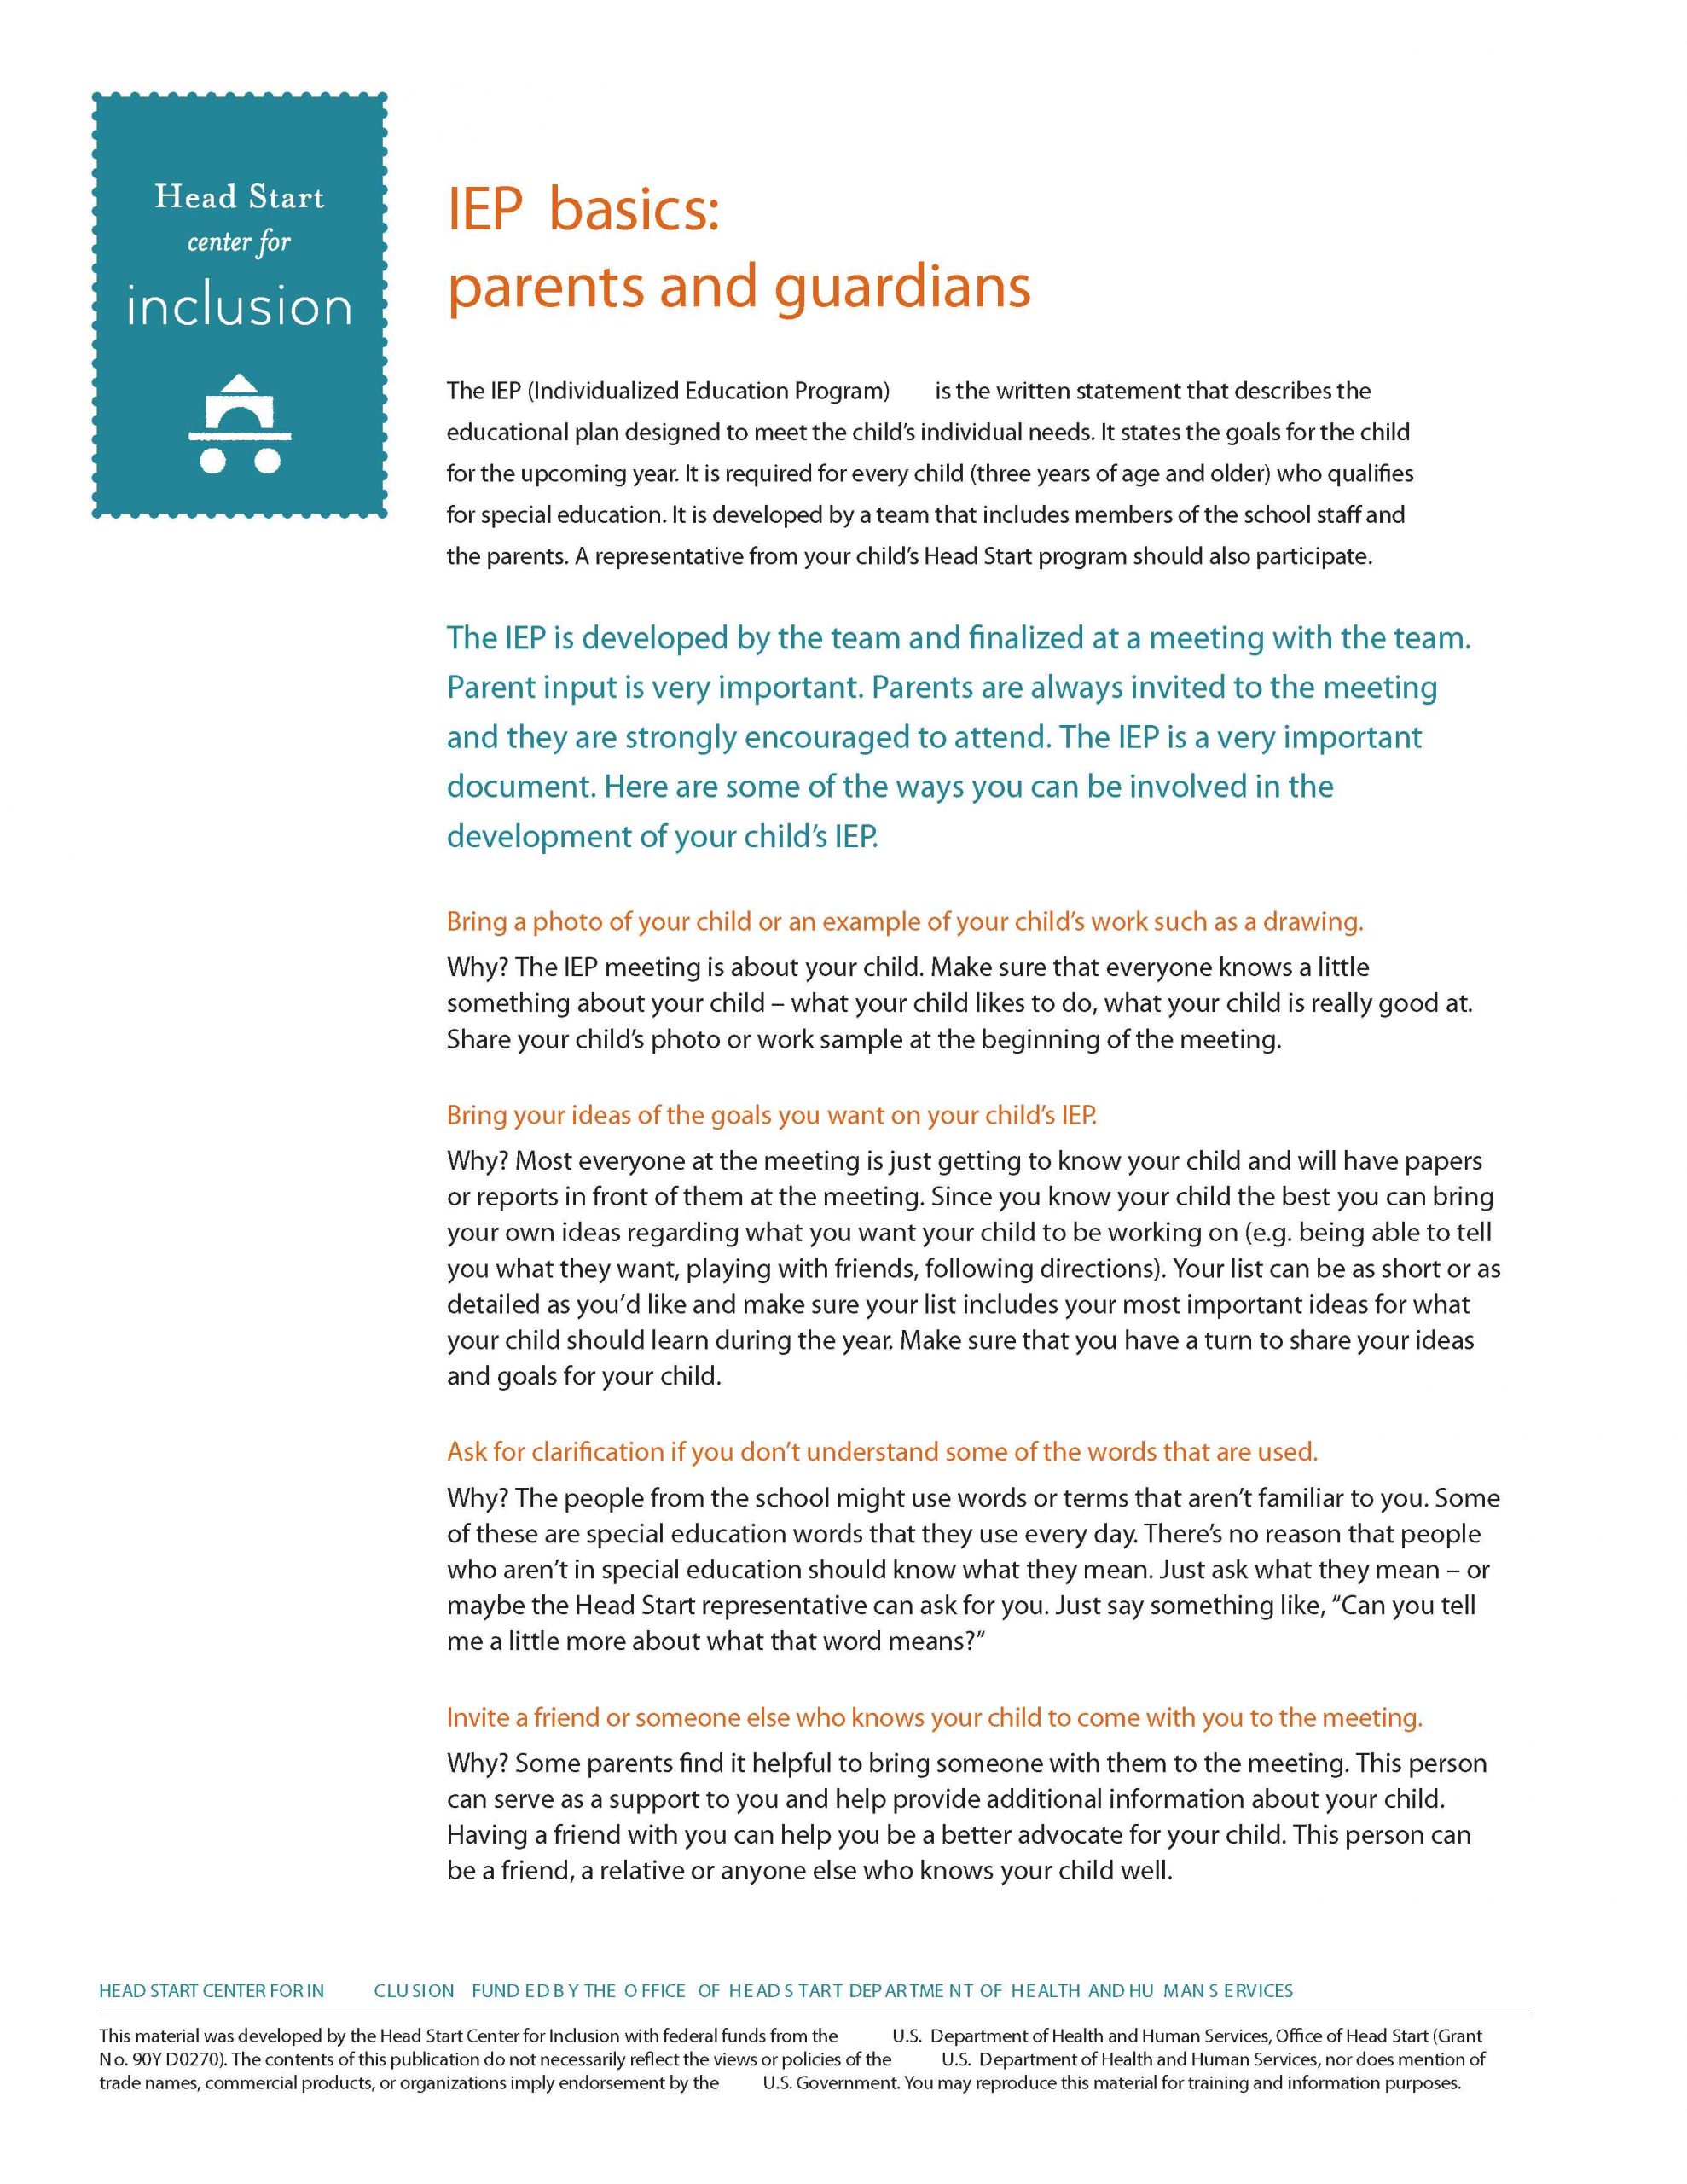 IEP basics: parents and guardians